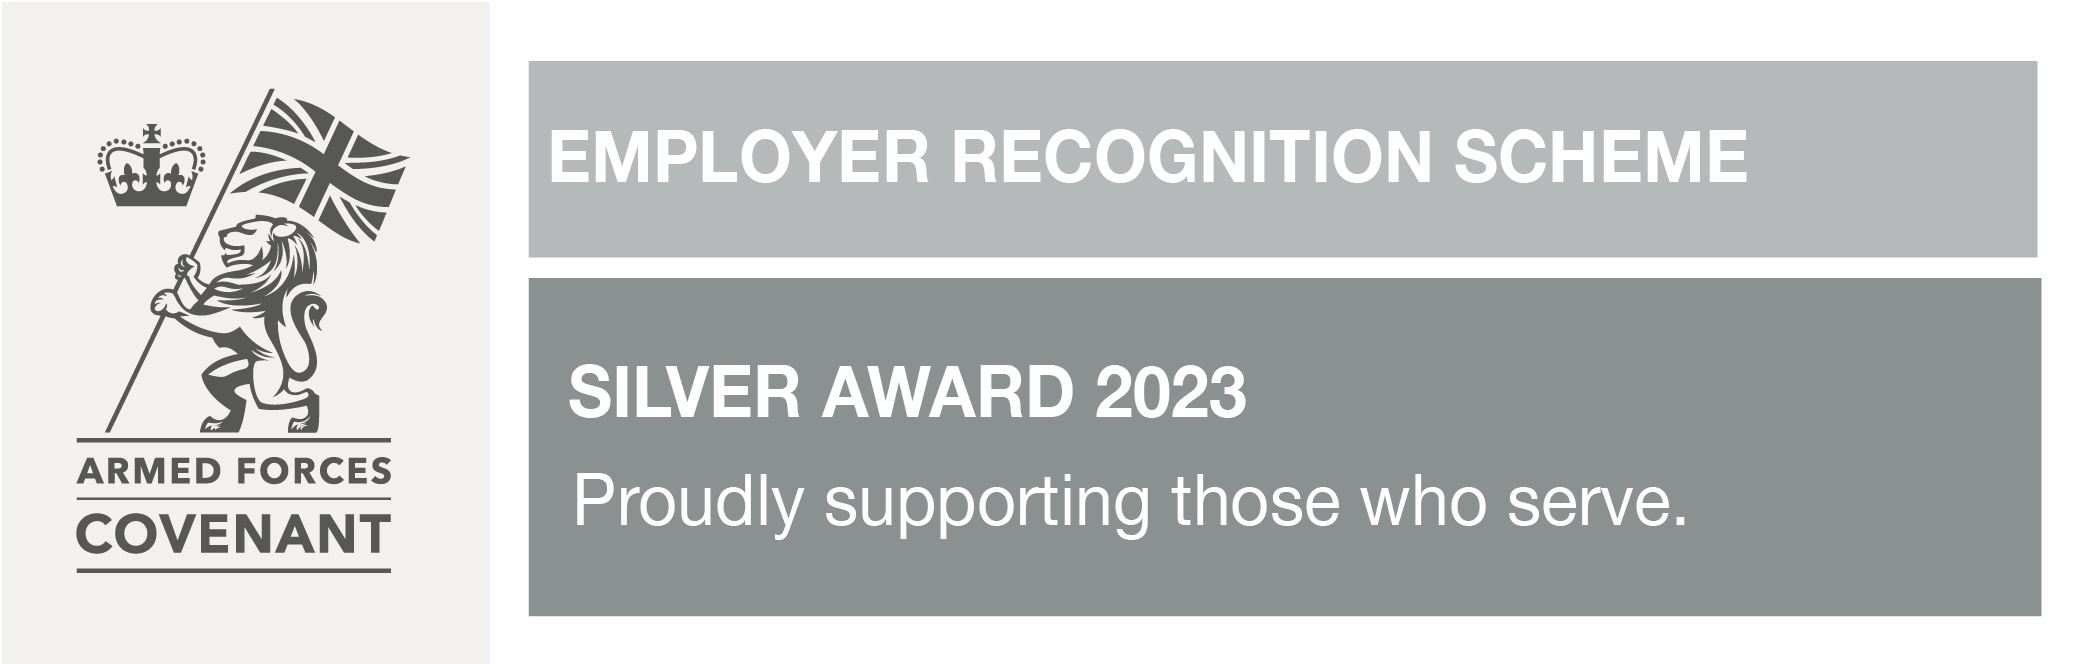 Employer Recognition Scheme - Silver award